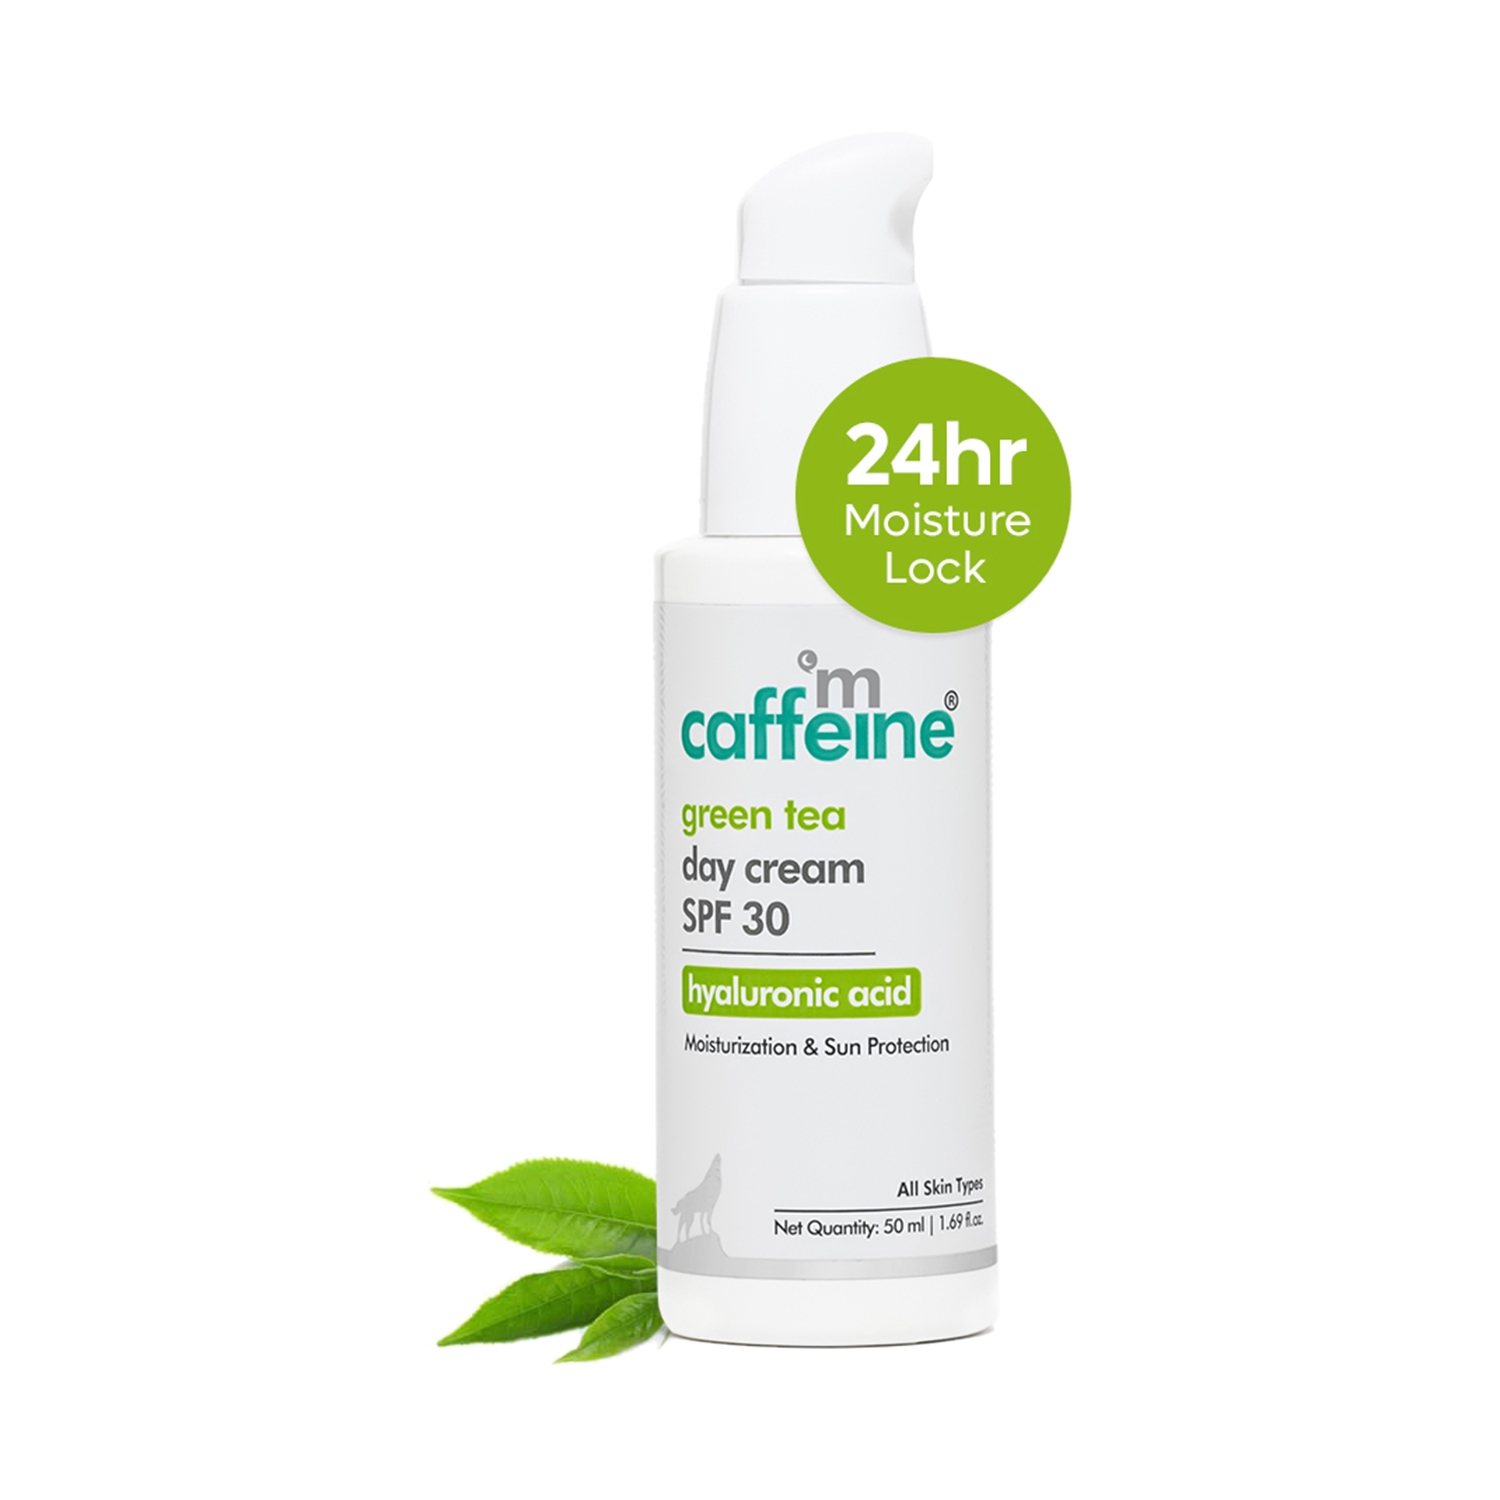 mCaffeine Green Tea Day Cream SPF 30 with Hyaluronic Acid (50ml)